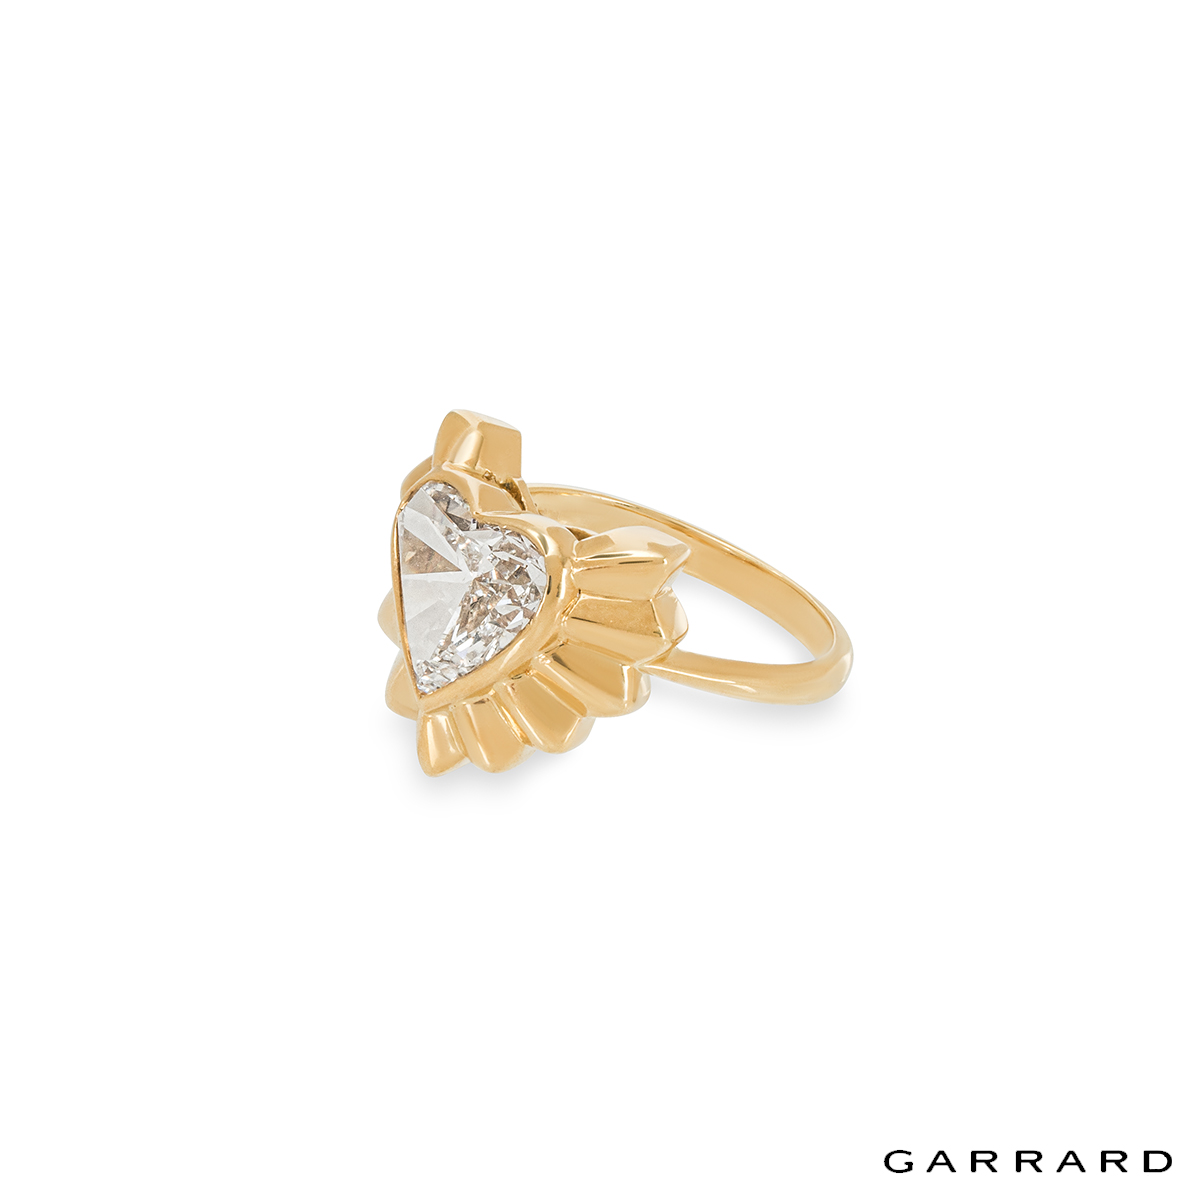 Garrard Yellow Gold Heart Cut Diamond Ring 2.68ct G/SI2